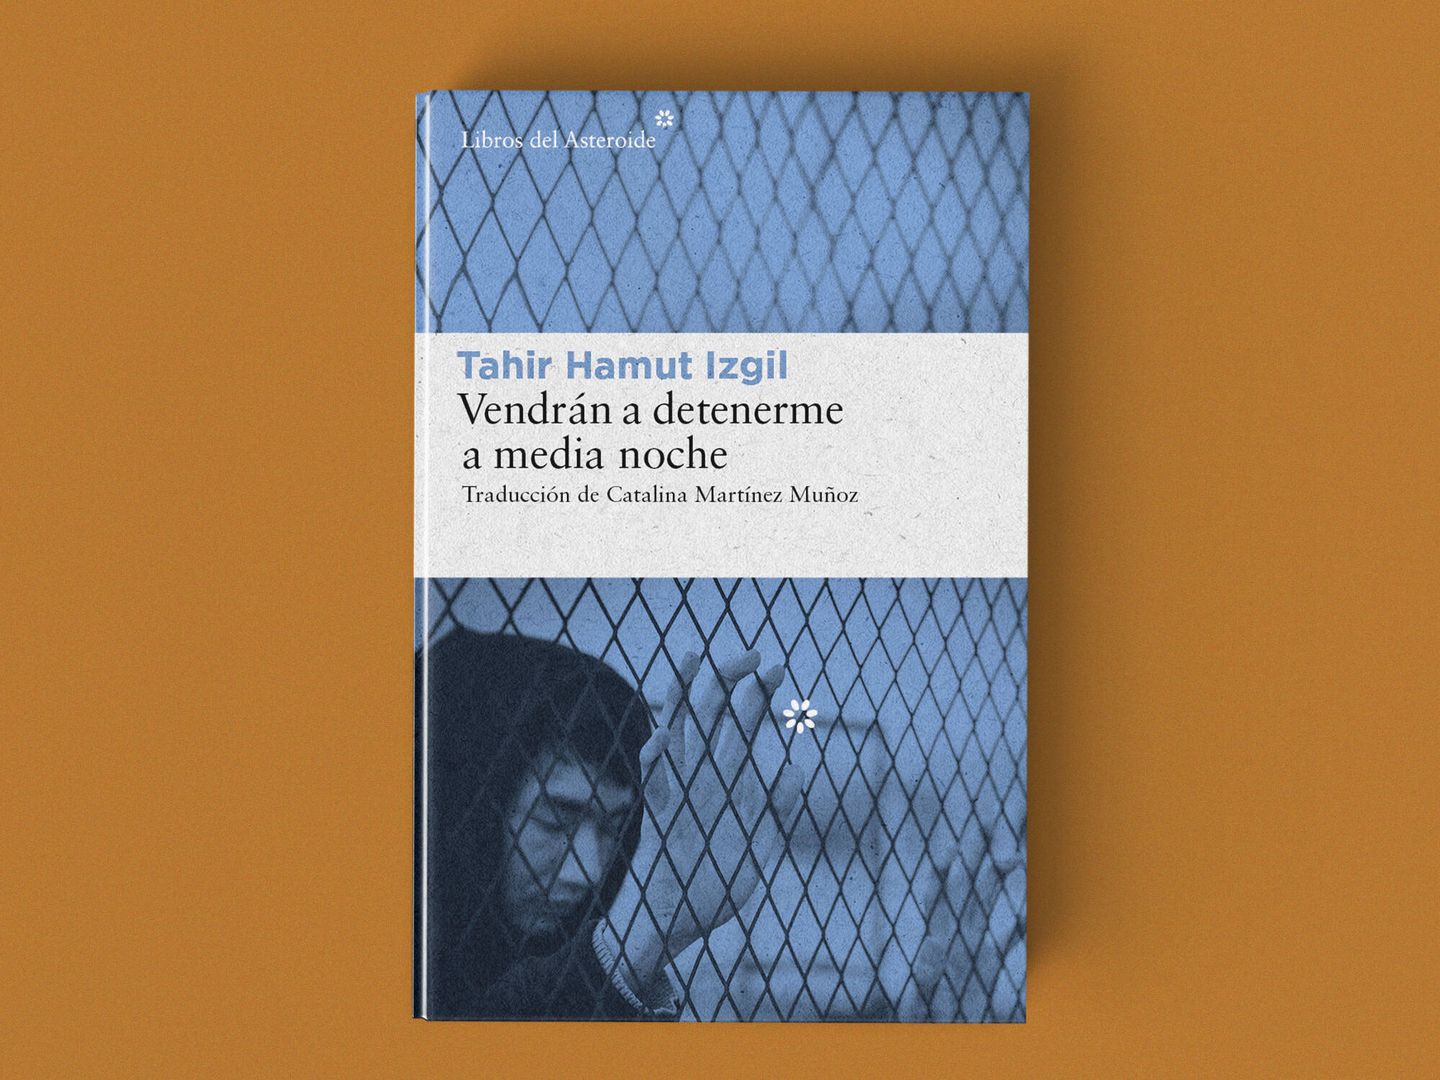 'Vendrán a detenerme a medianoche', de Tahir Hamut, Izgil (Libros del Asteroide).